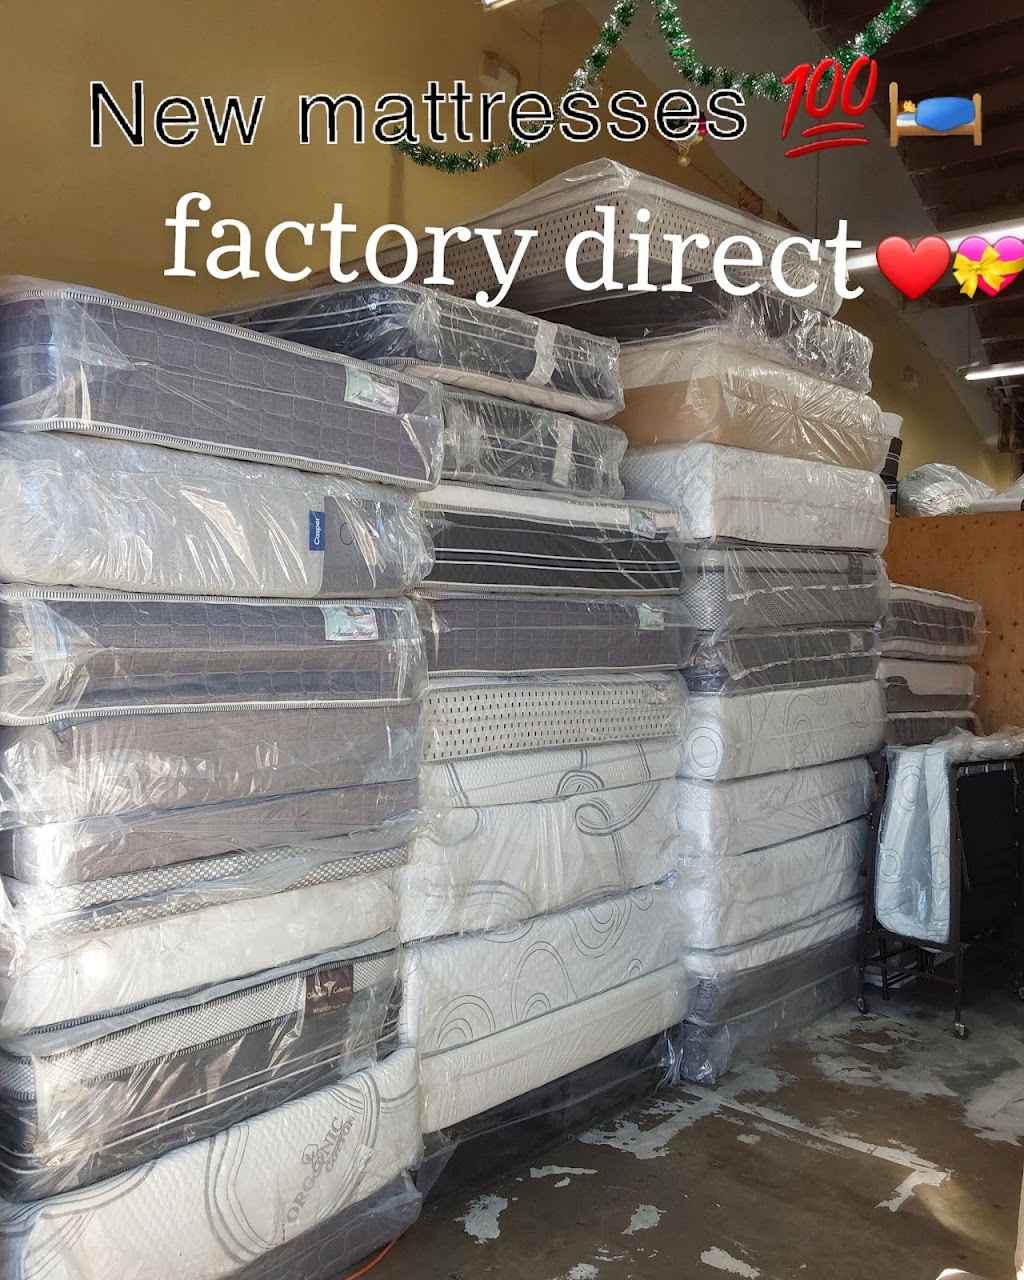 Jesse mattress and furniture#2 | 5131 Avalon Blvd, Los Angeles, CA 90011, USA | Phone: (323) 396-6893